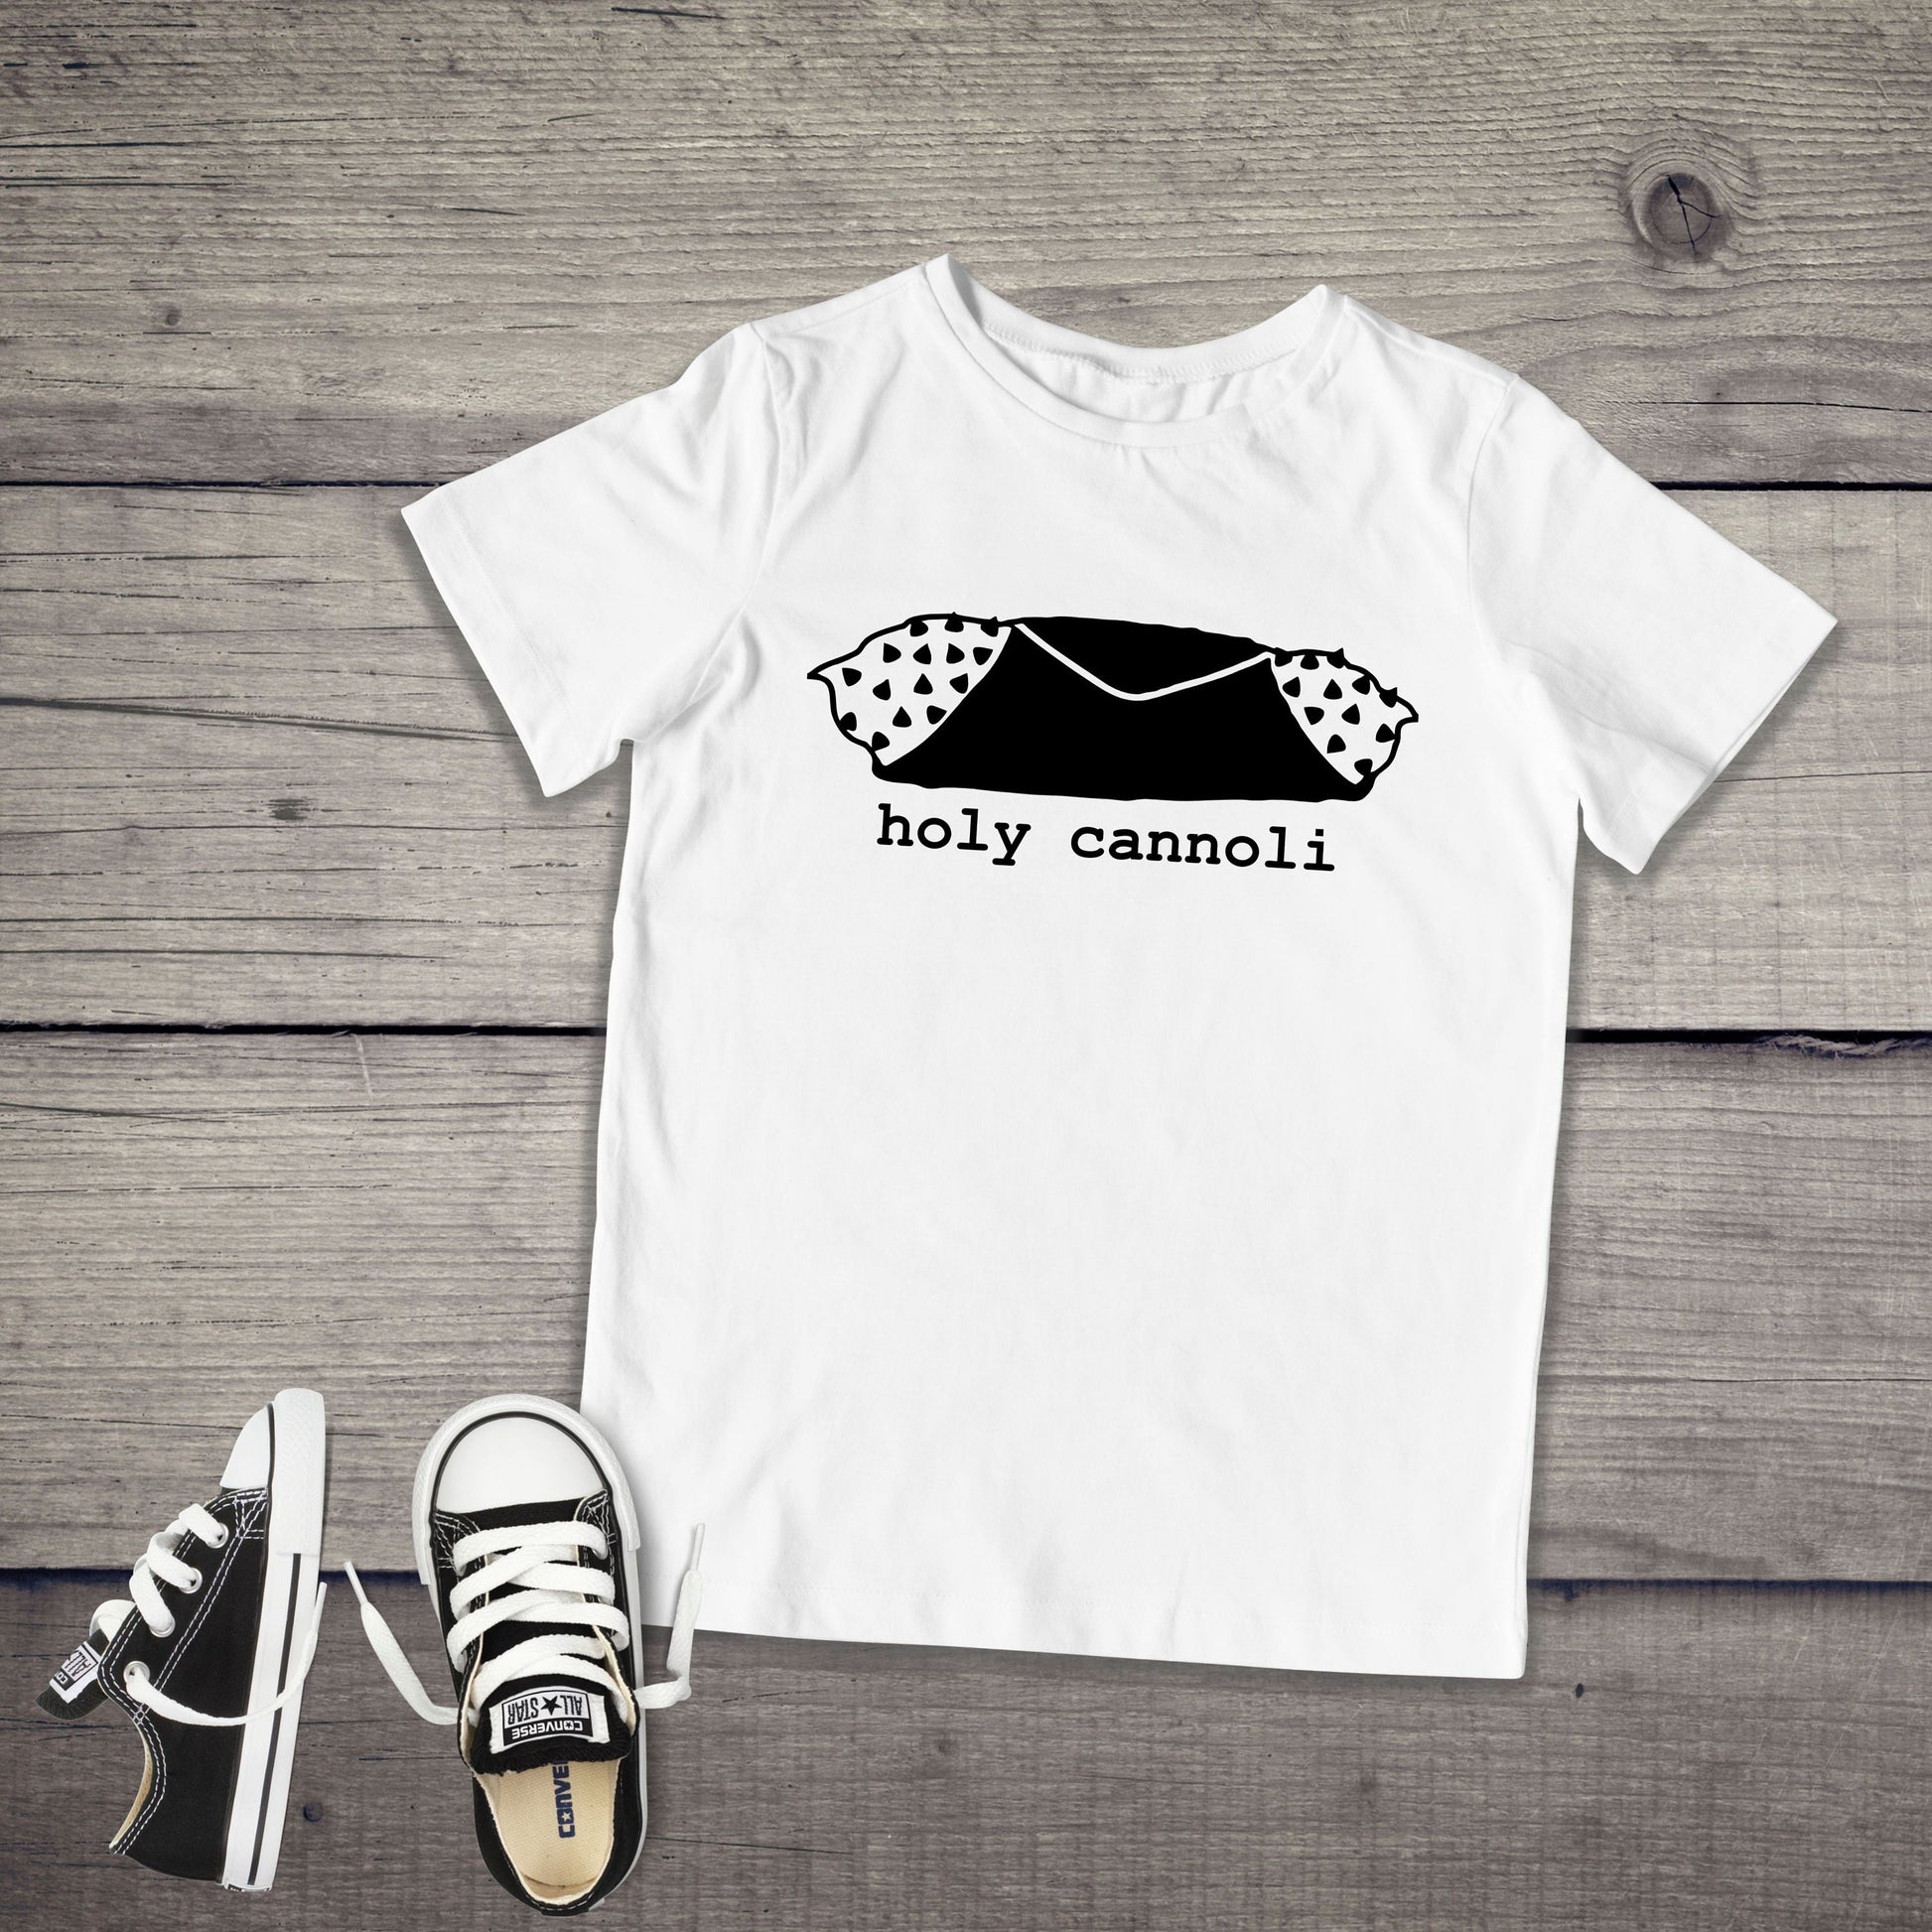 Holy Cannoli Infant or Toddler Shirt or Bodysuit - Cute Toddler Shirt - Italian Shirt - Holy Cannoli - Toddler Boy Shirt - Preschool